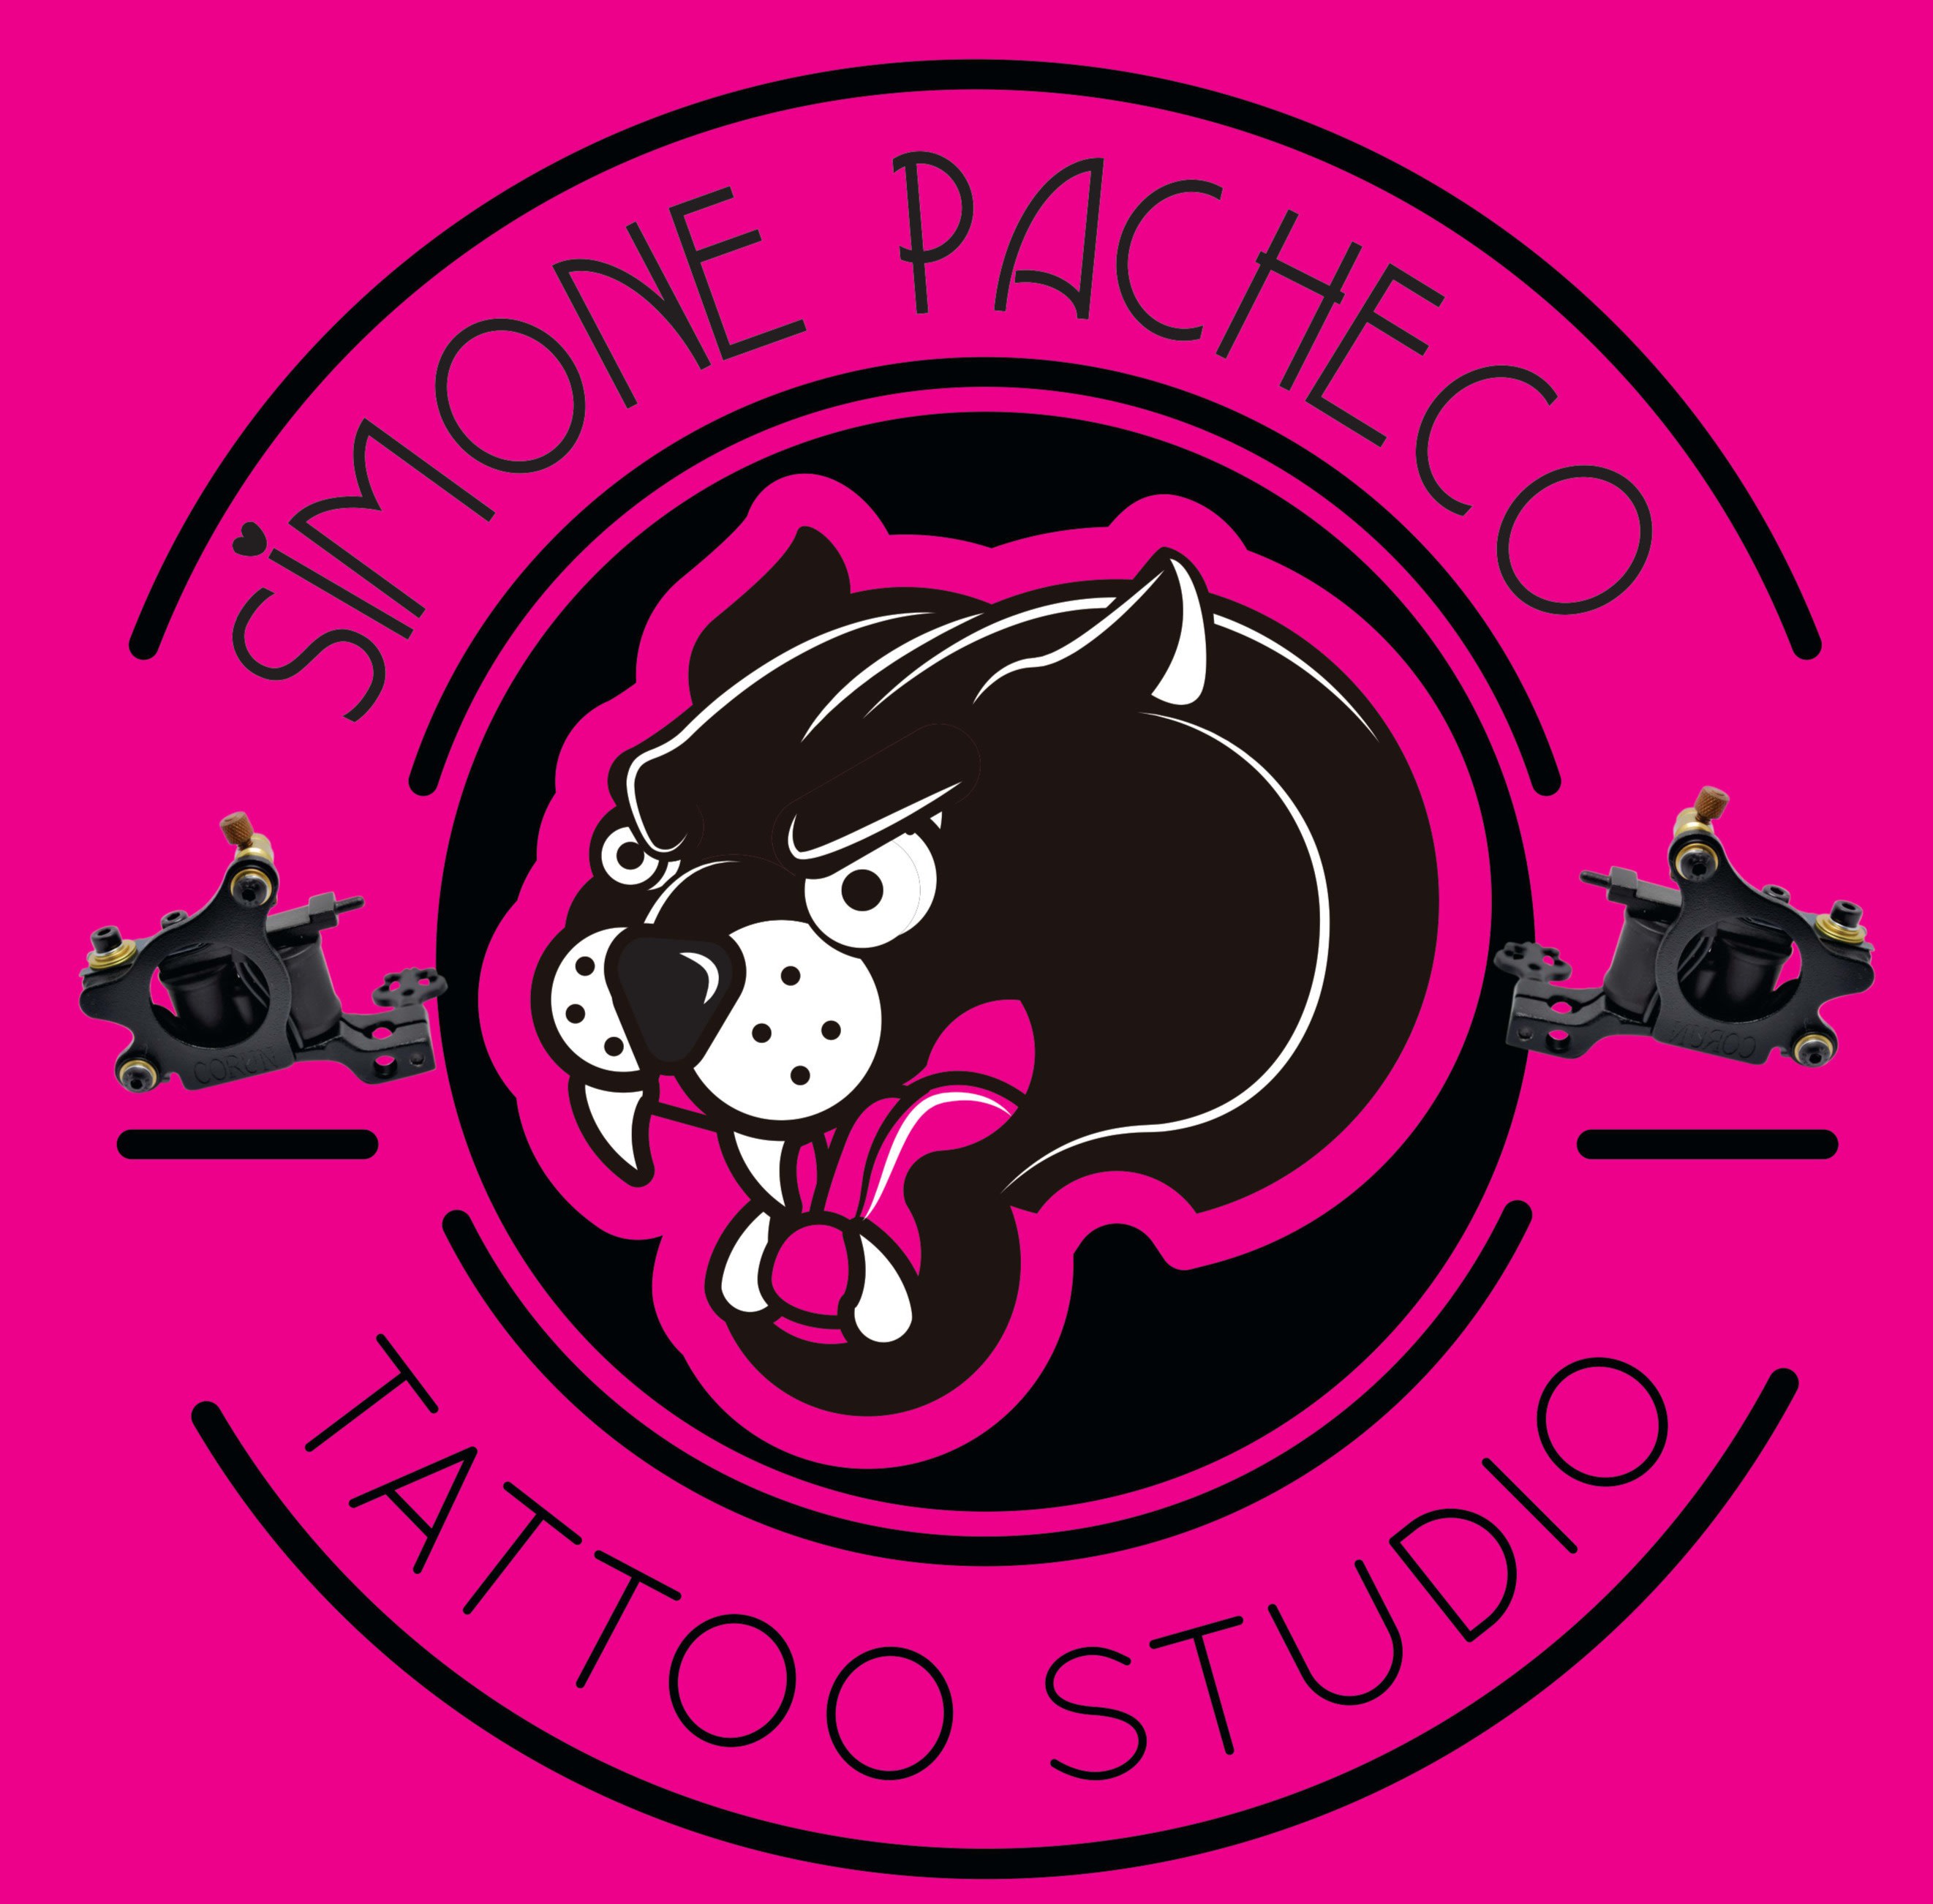 Simone Pacheco Tattoo